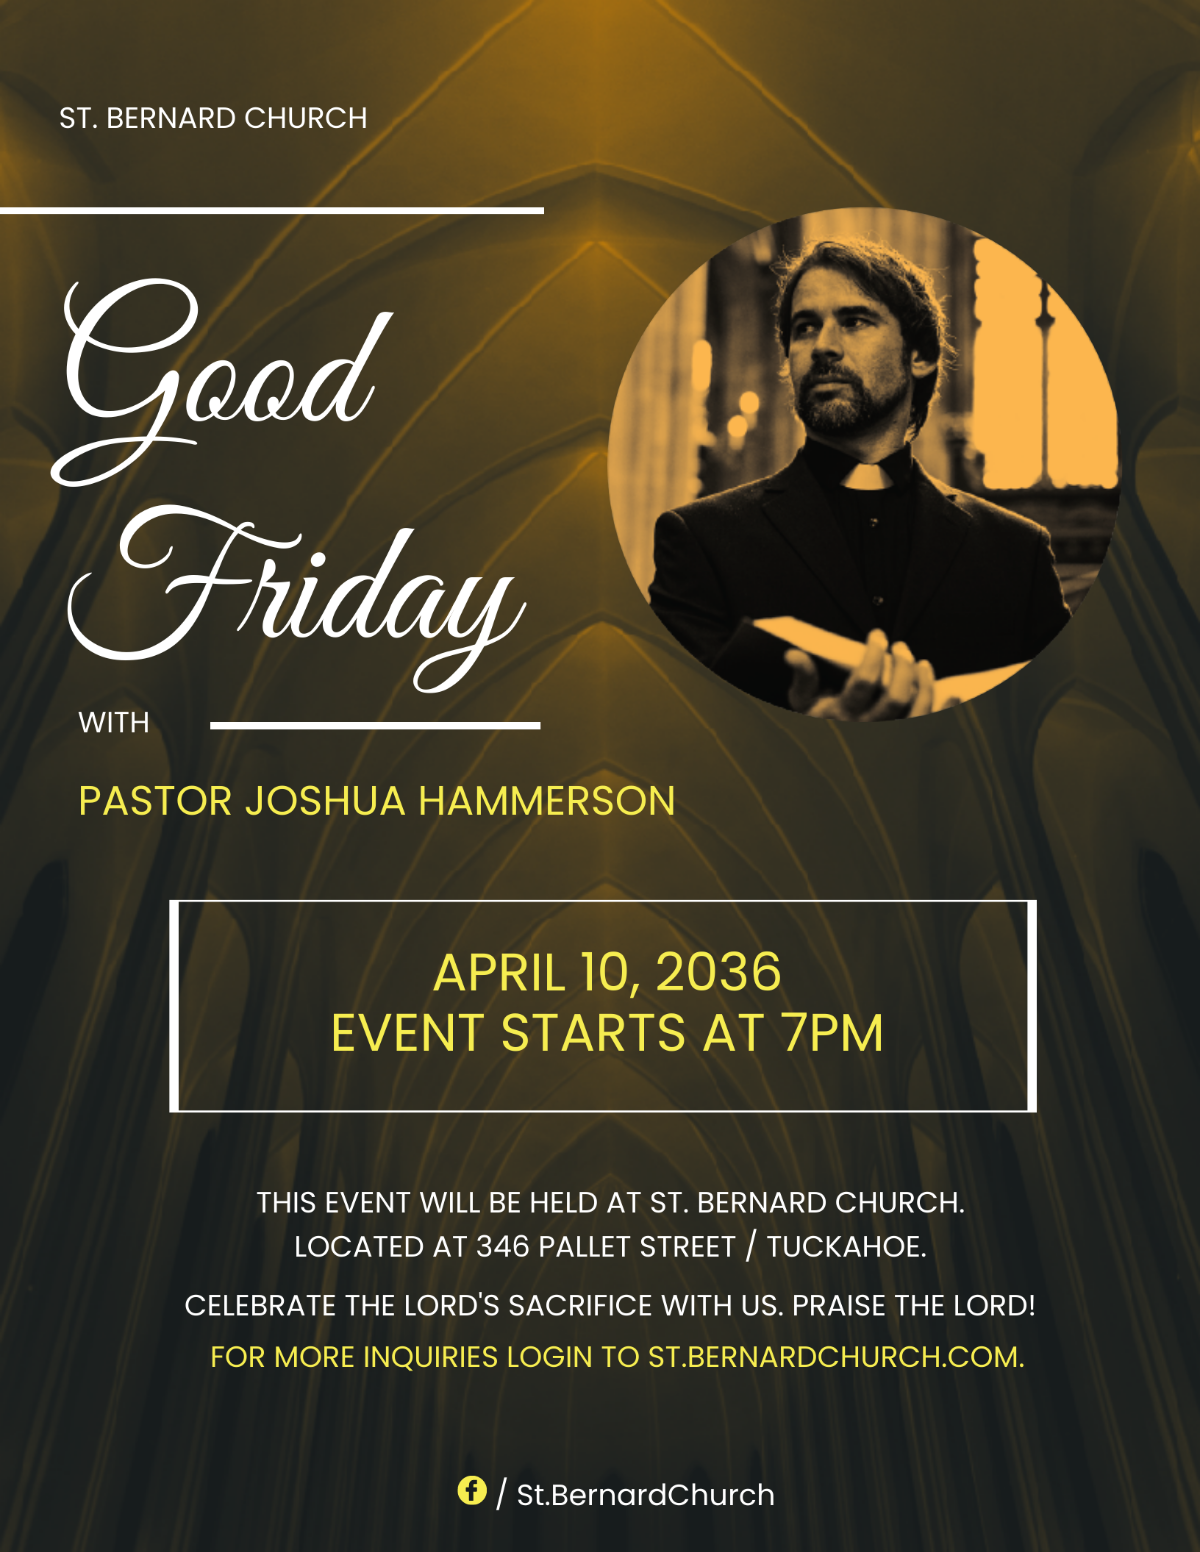 Good Friday Church Flyer Template